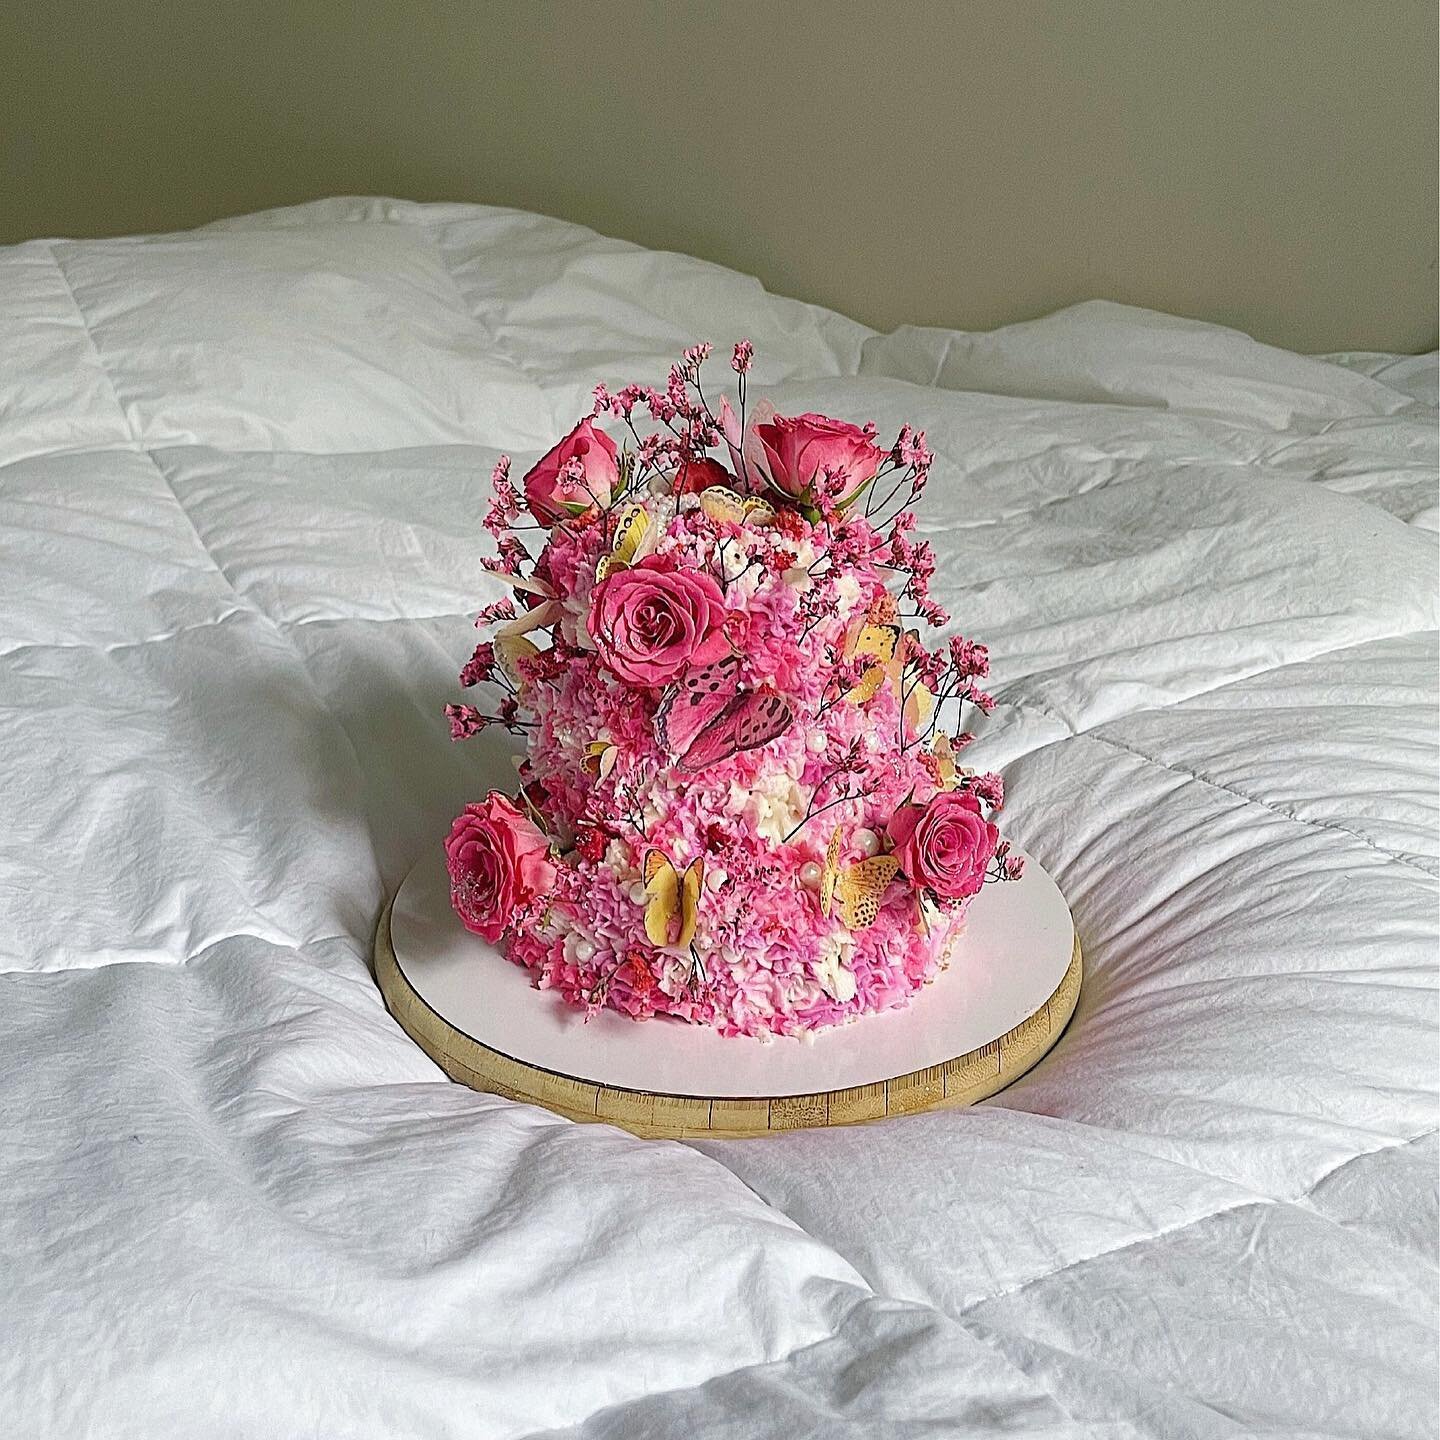 𝓟𝓲𝓷𝓴 𝓭𝓻𝓮𝓪𝓶 
💅🏼 𝘎𝘍 𝘍𝘶𝘯𝘧𝘦𝘵𝘵𝘪 𝘢𝘯𝘥 𝘓𝘦𝘮𝘰𝘯 𝘤𝘢𝘬𝘦 𝘧𝘰𝘳 𝘢 𝘣𝘥𝘢𝘺 𝘨𝘺𝘢𝘢𝘢𝘢𝘭

#cake #cakedecorating #cakes #birthdaycake #chocolate #food #dessert #cakesofinstagram #birthday #cakedesign #instafood #baking #foodporn #y